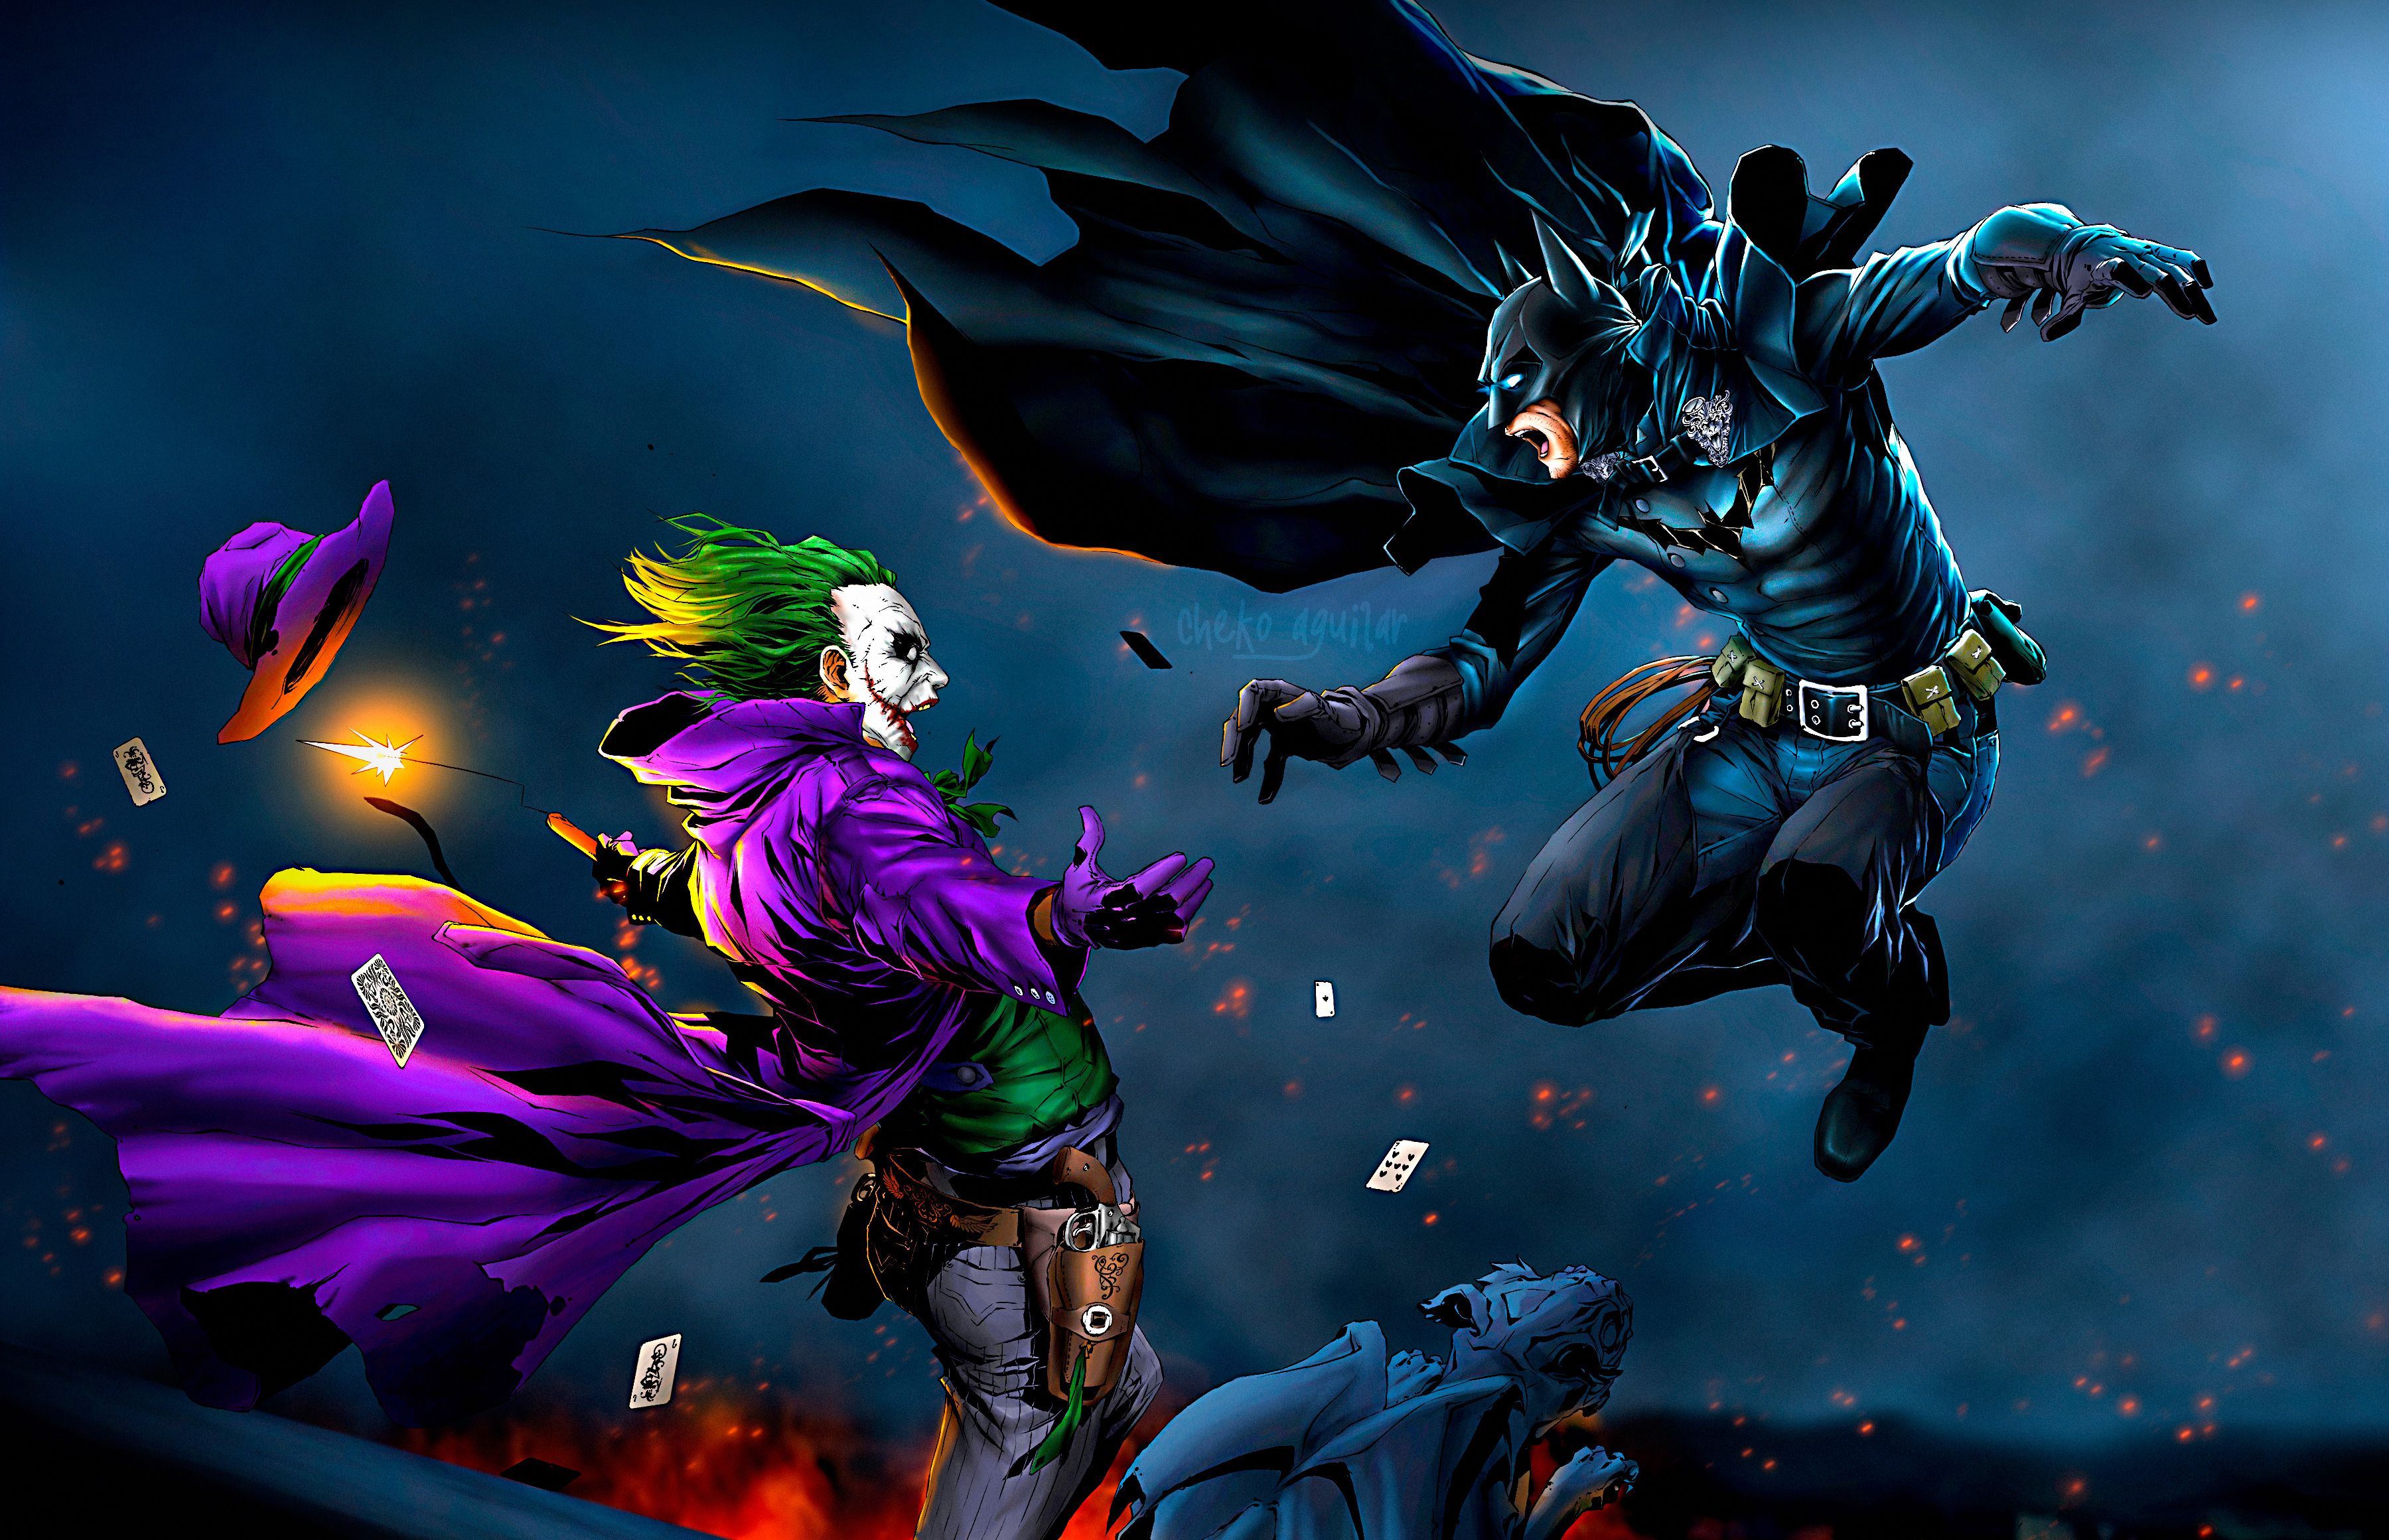 Batman Vs Joker, HD Superheroes, 4k Wallpaper, Image, Background, Photo and Picture